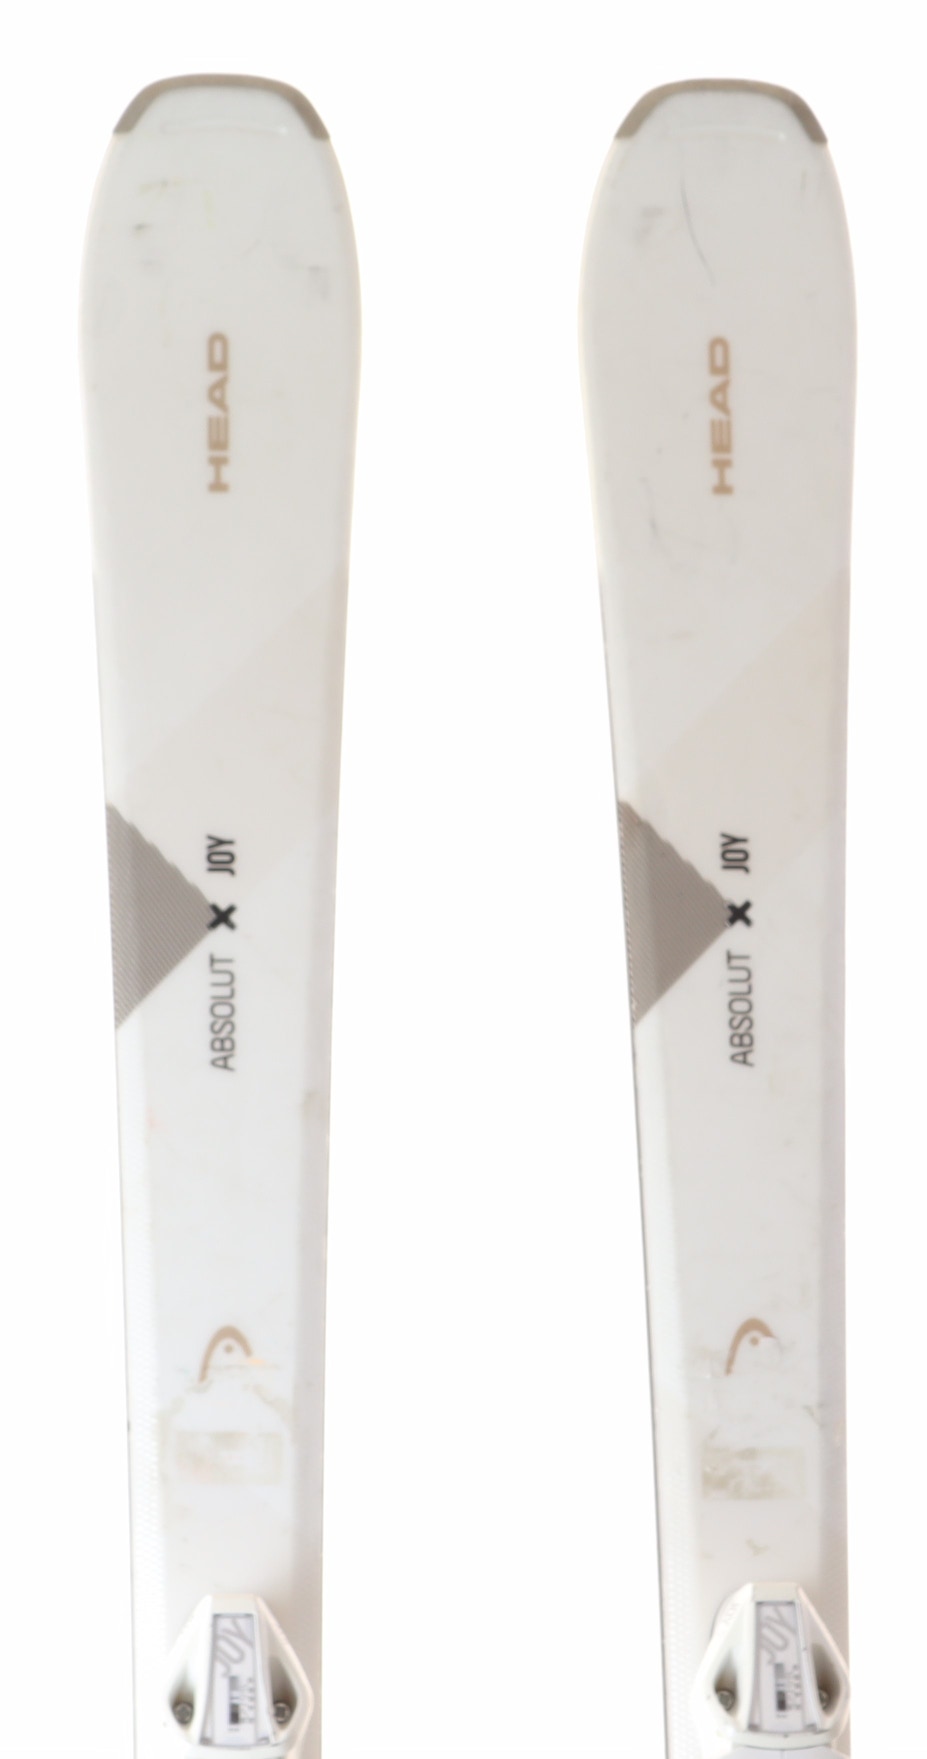 Used 2020 Head Absolut Joy Ski with Head Joy 9 bindings, Size 163 (Option 221452)